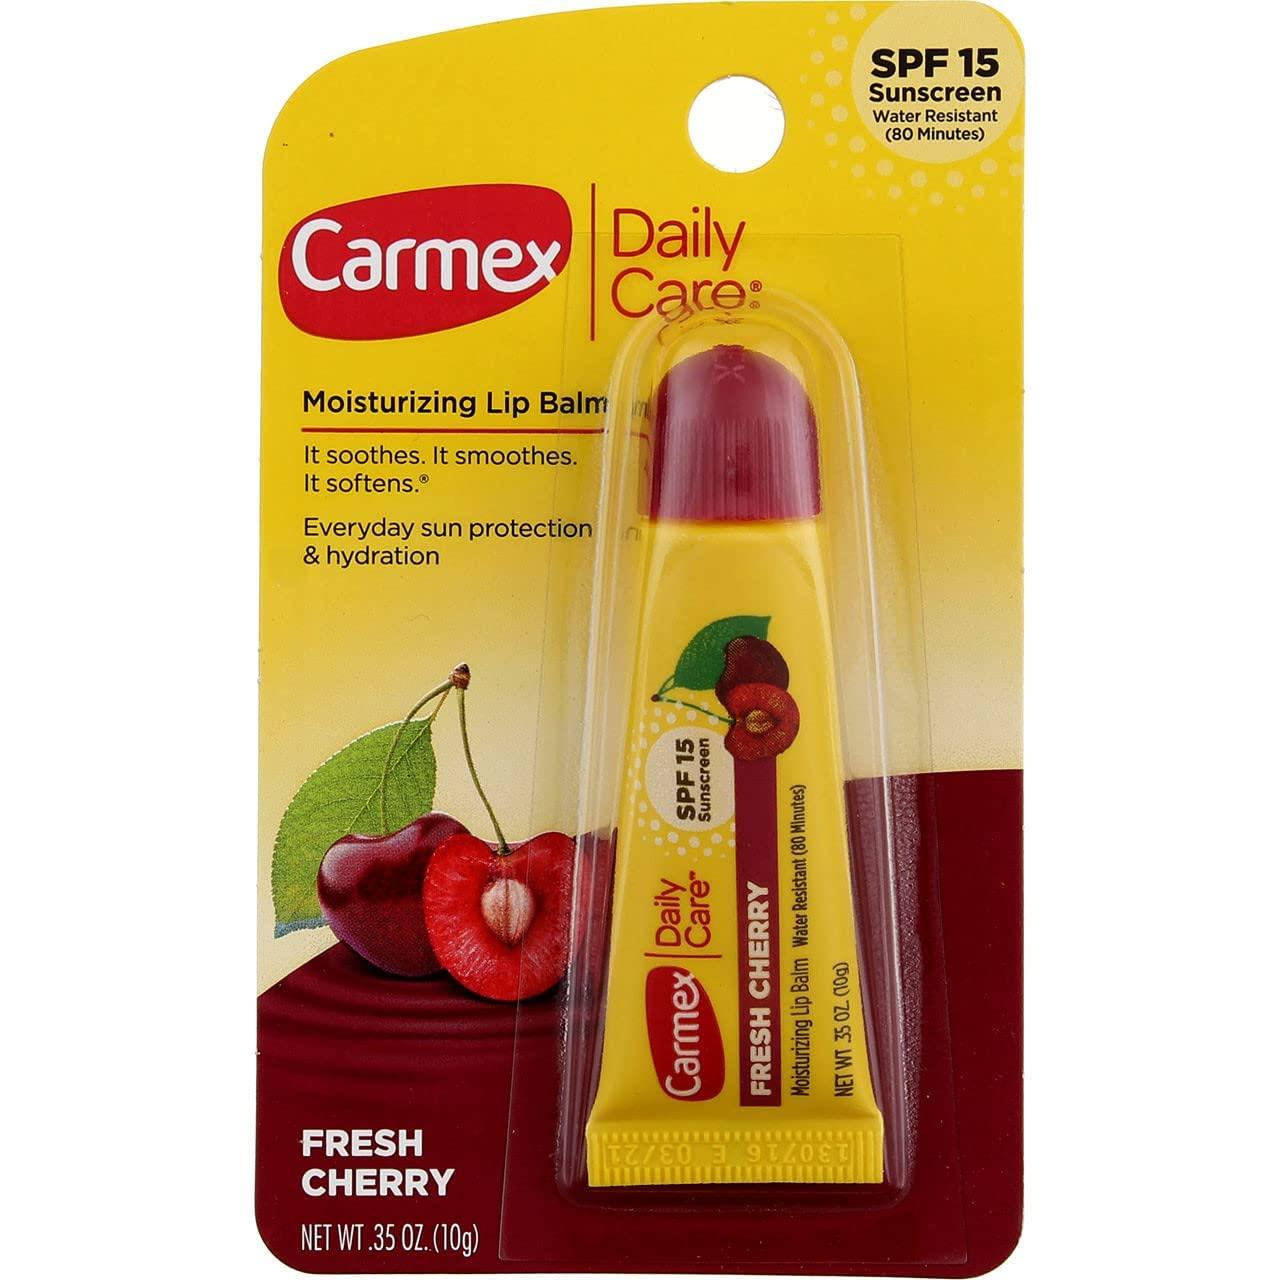 Carmex Daily Care Moisturizing Lip Balm - FRESH CHERRY